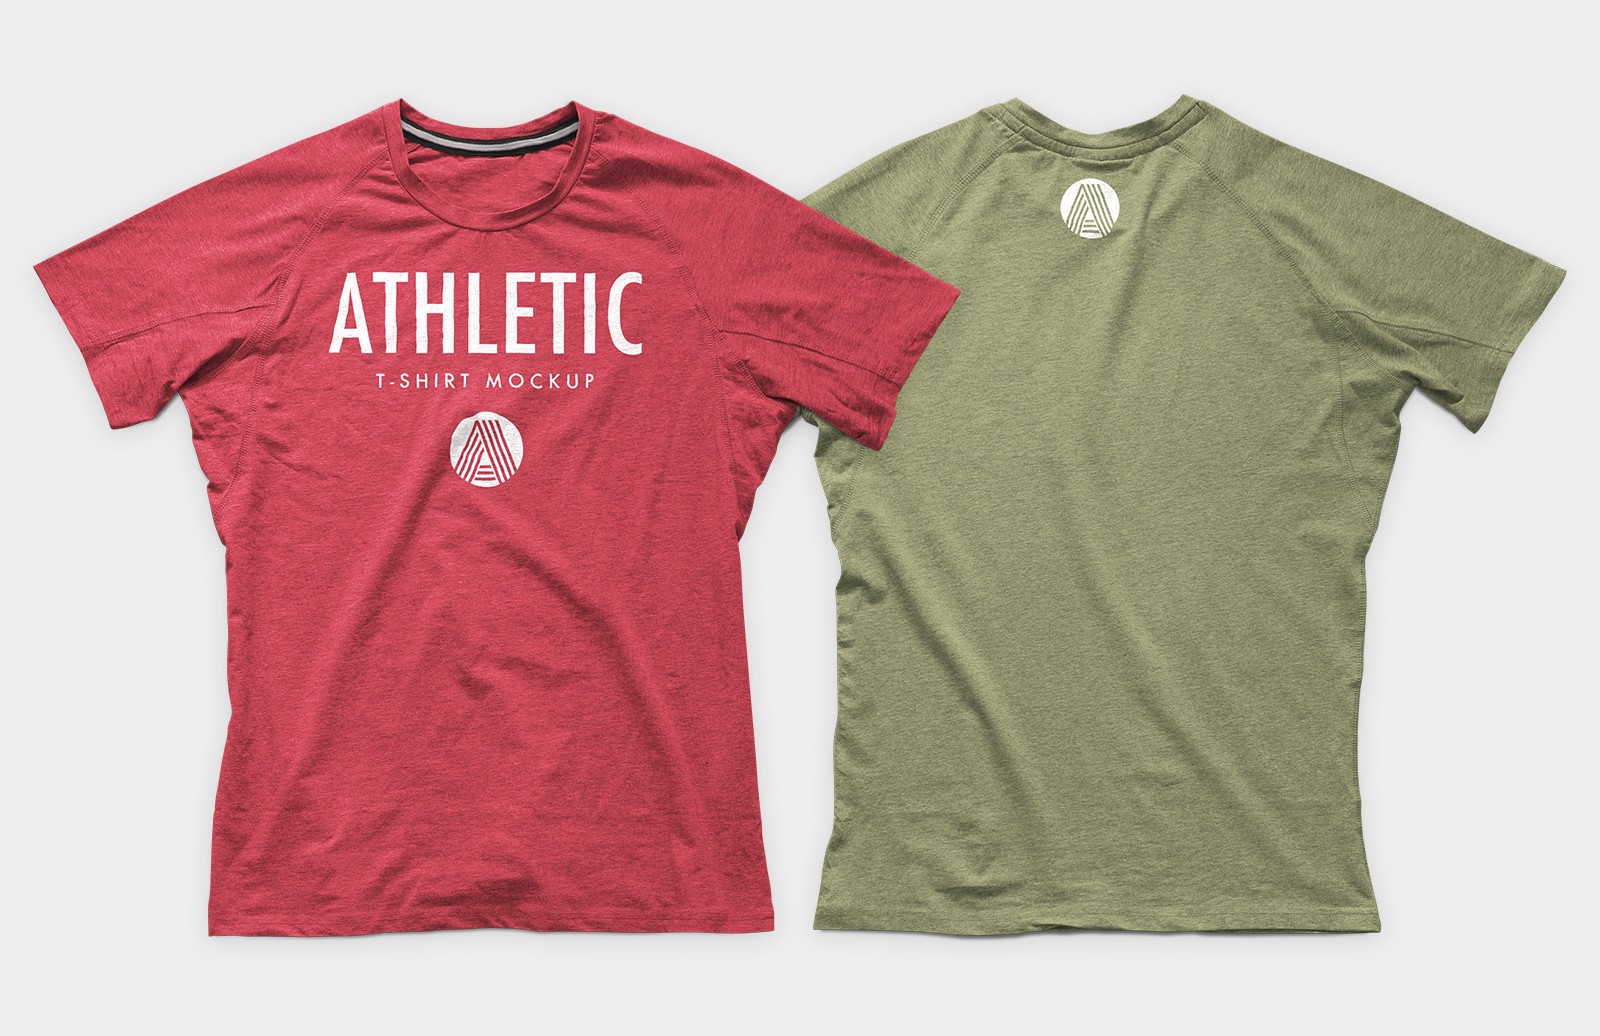 经典运动T恤样机 Athletic T-Shirt Mockup PSD插图(2)